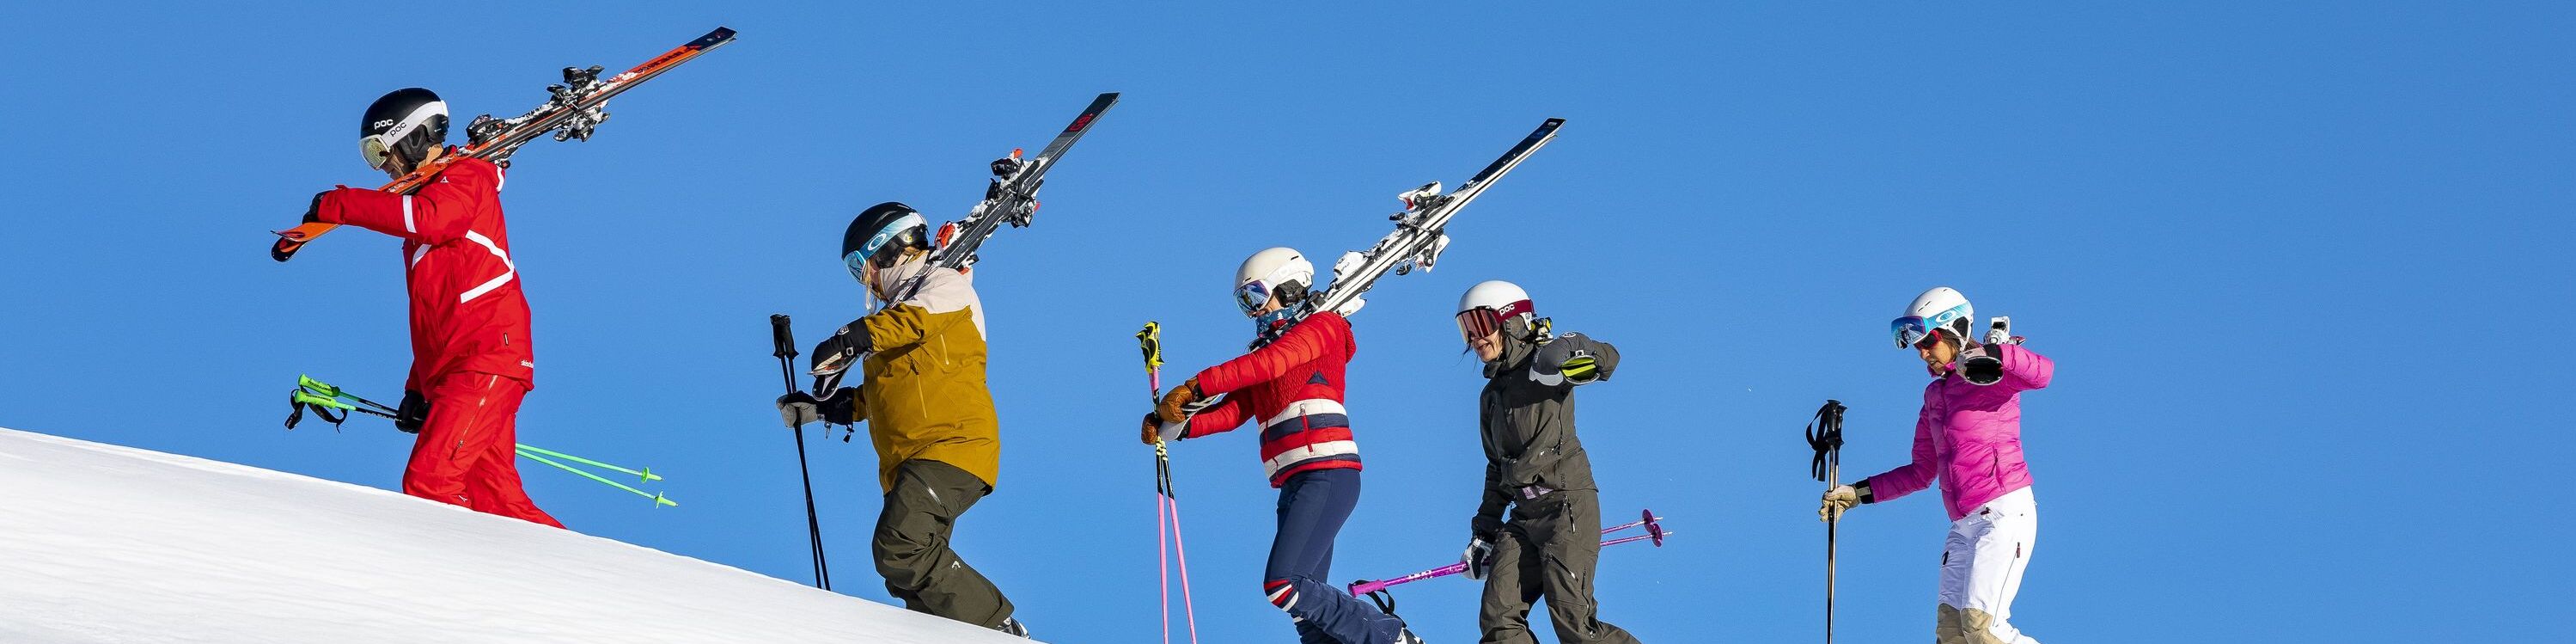 Group ski course Ski School Hirschegg shoulders skis on the slopes 